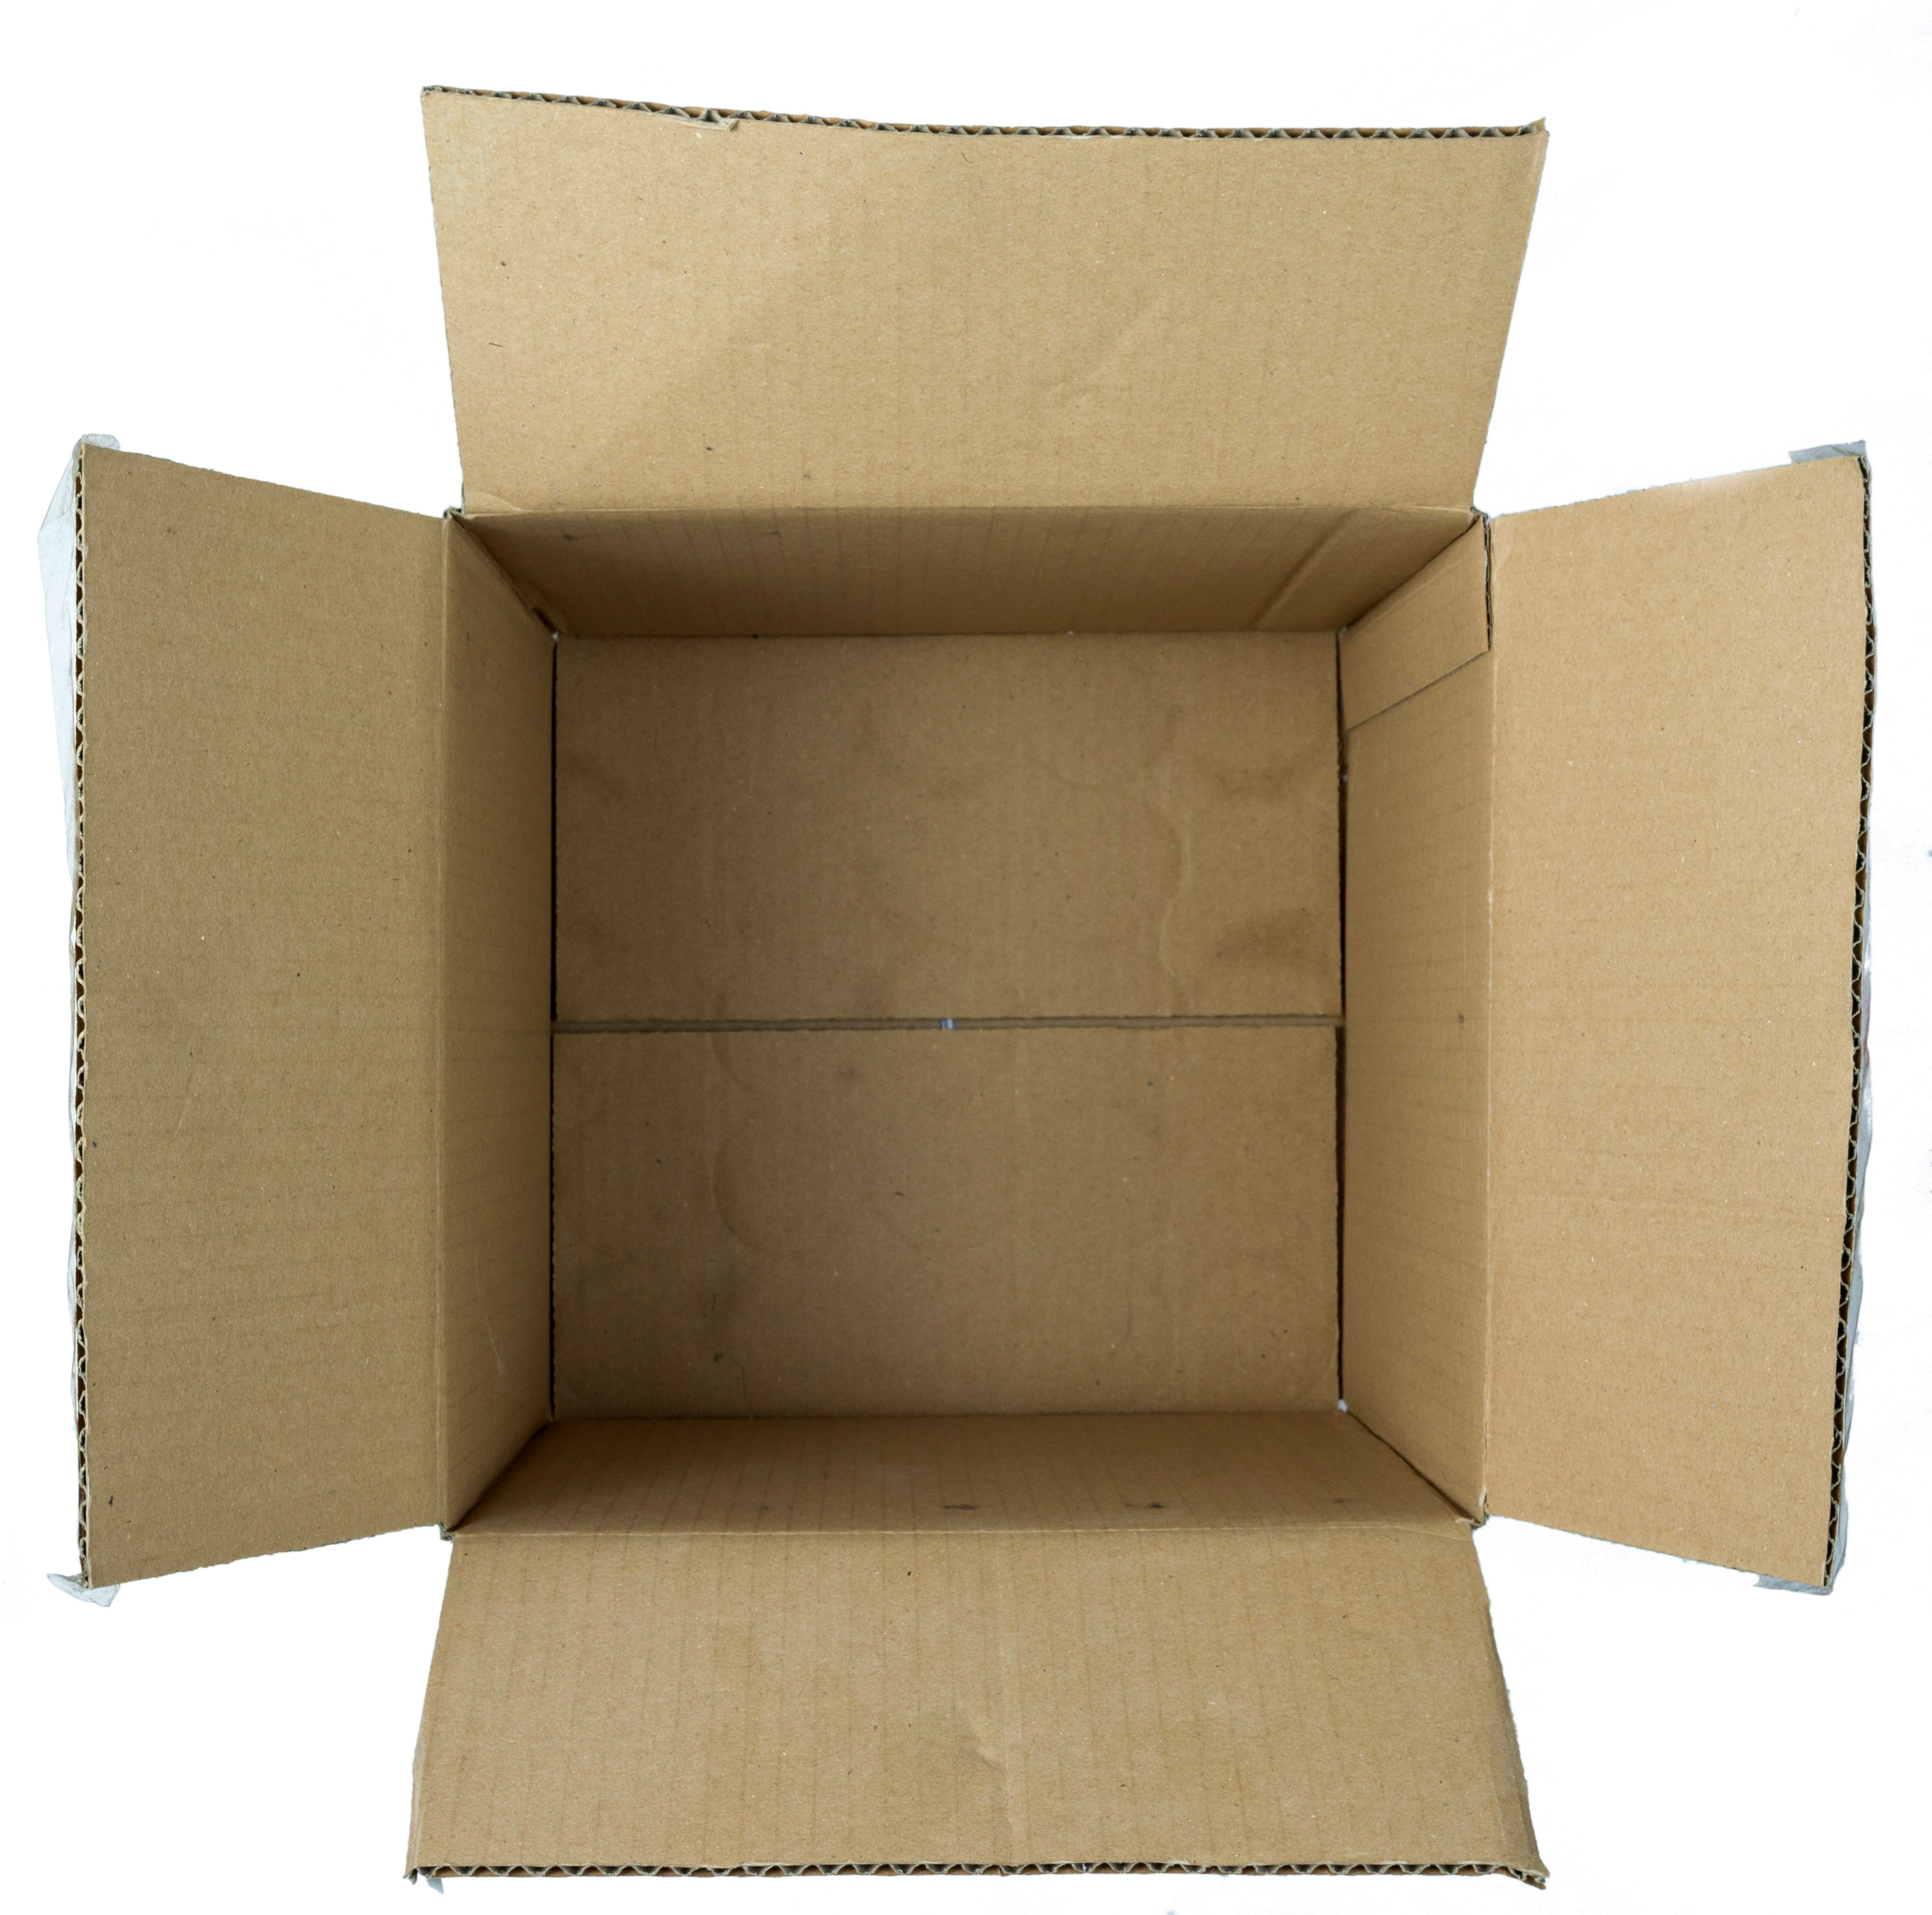 Download Cardboard Box image - Free stock photo - Public Domain ...